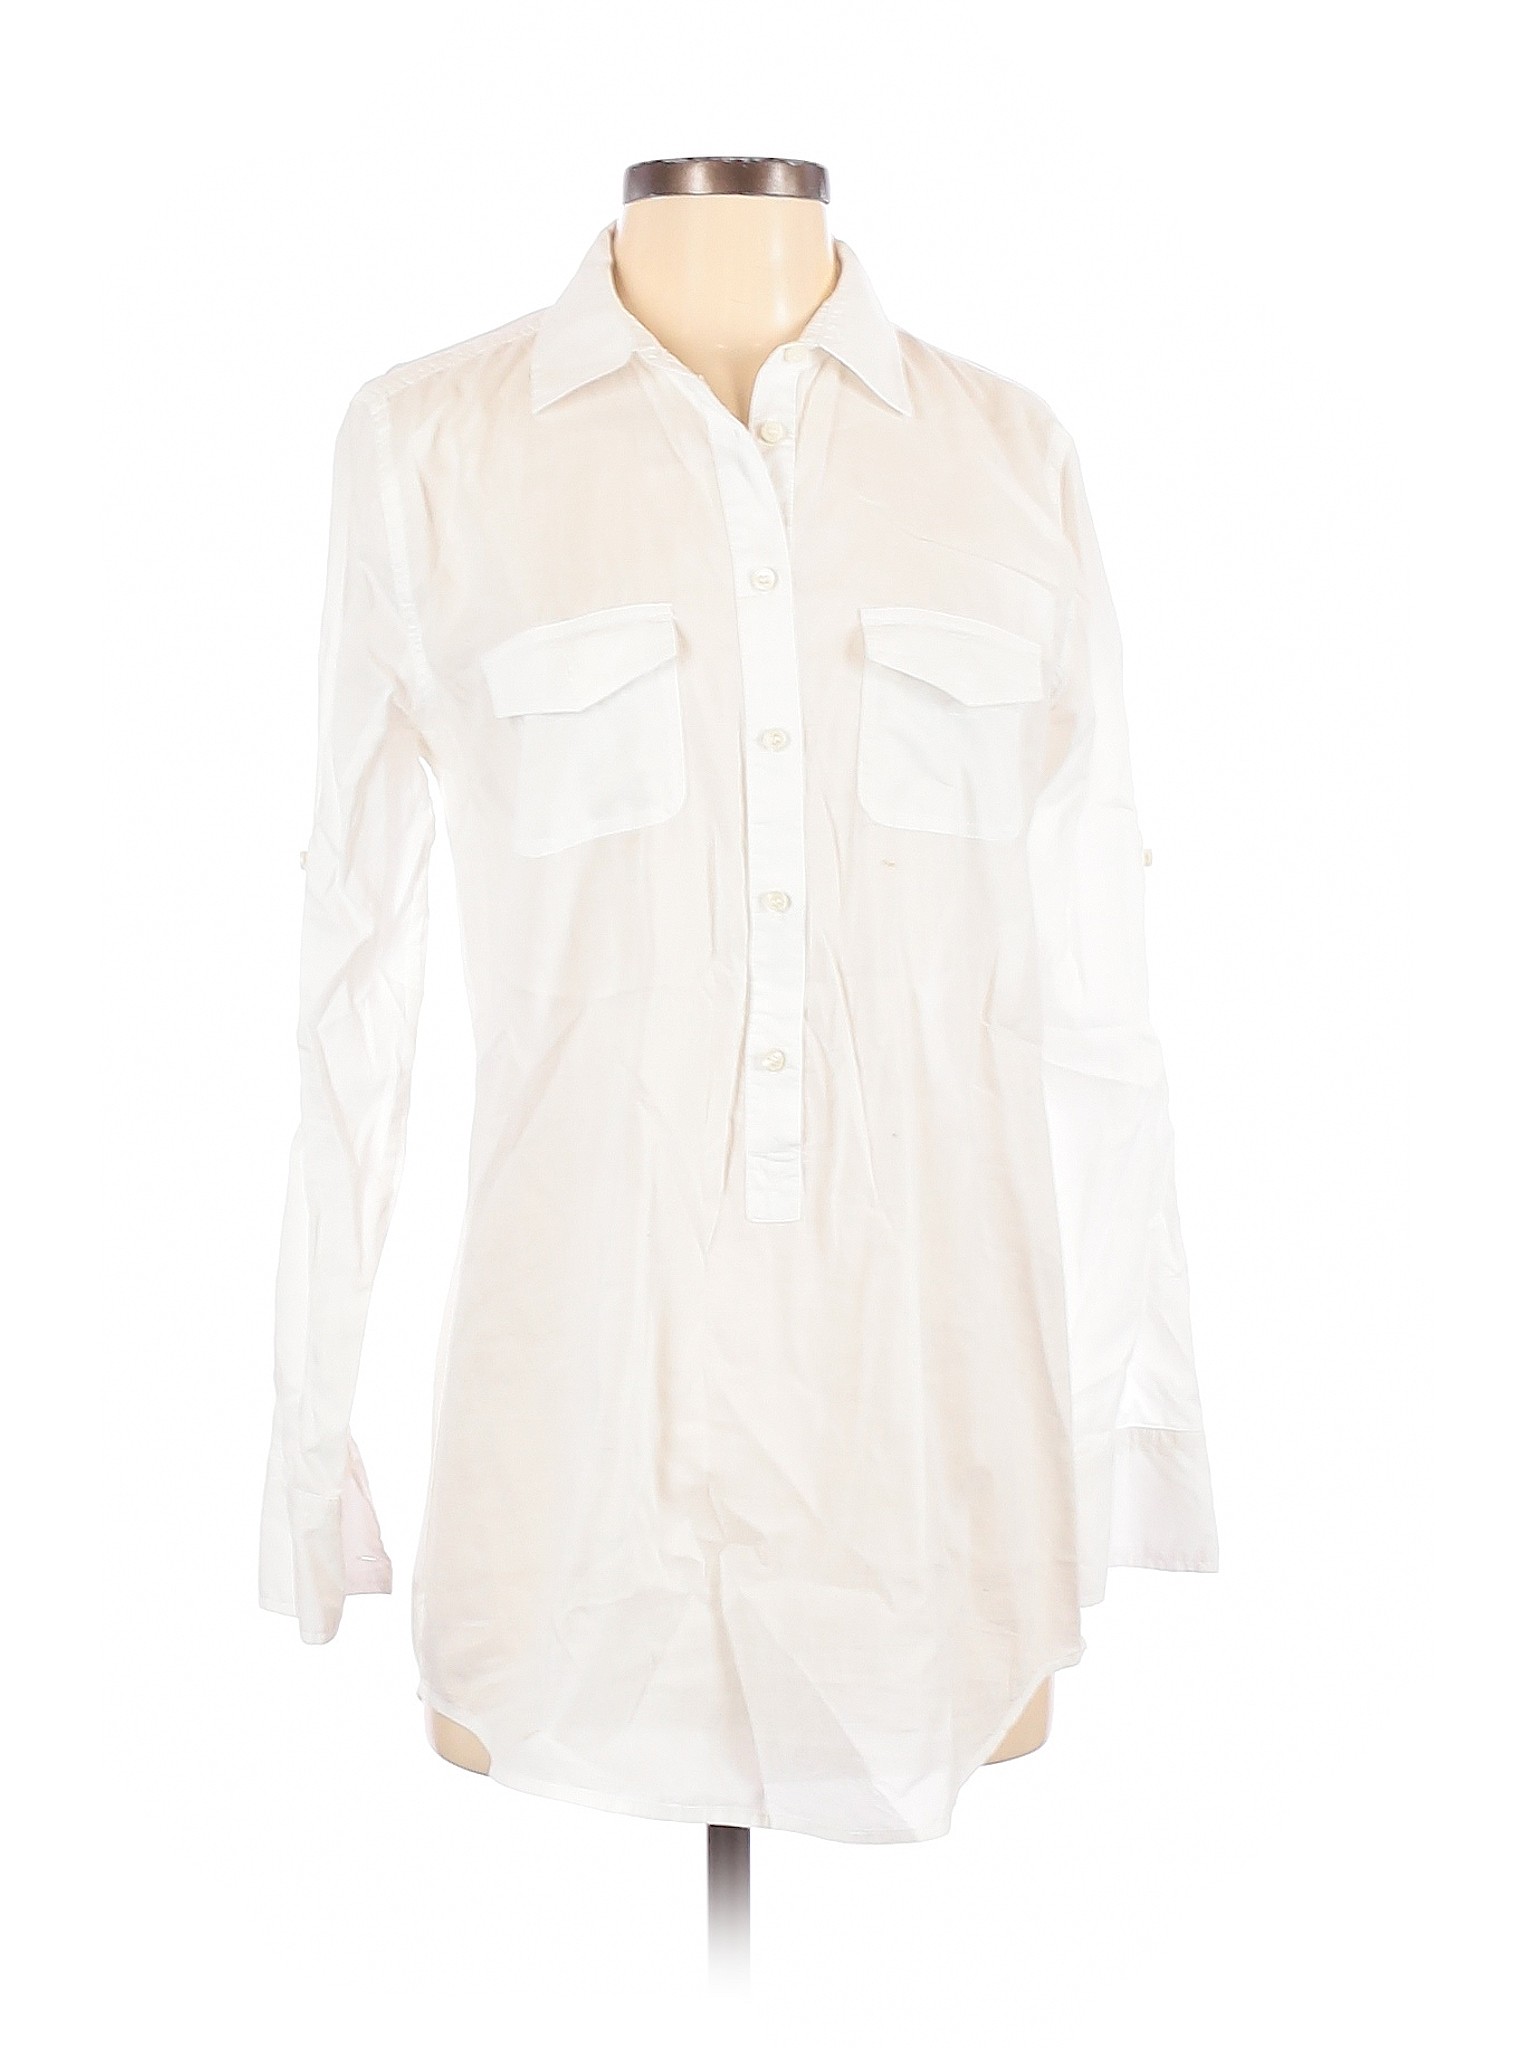 J.Crew Factory Store Women White Long Sleeve Button-Down Shirt XS | eBay